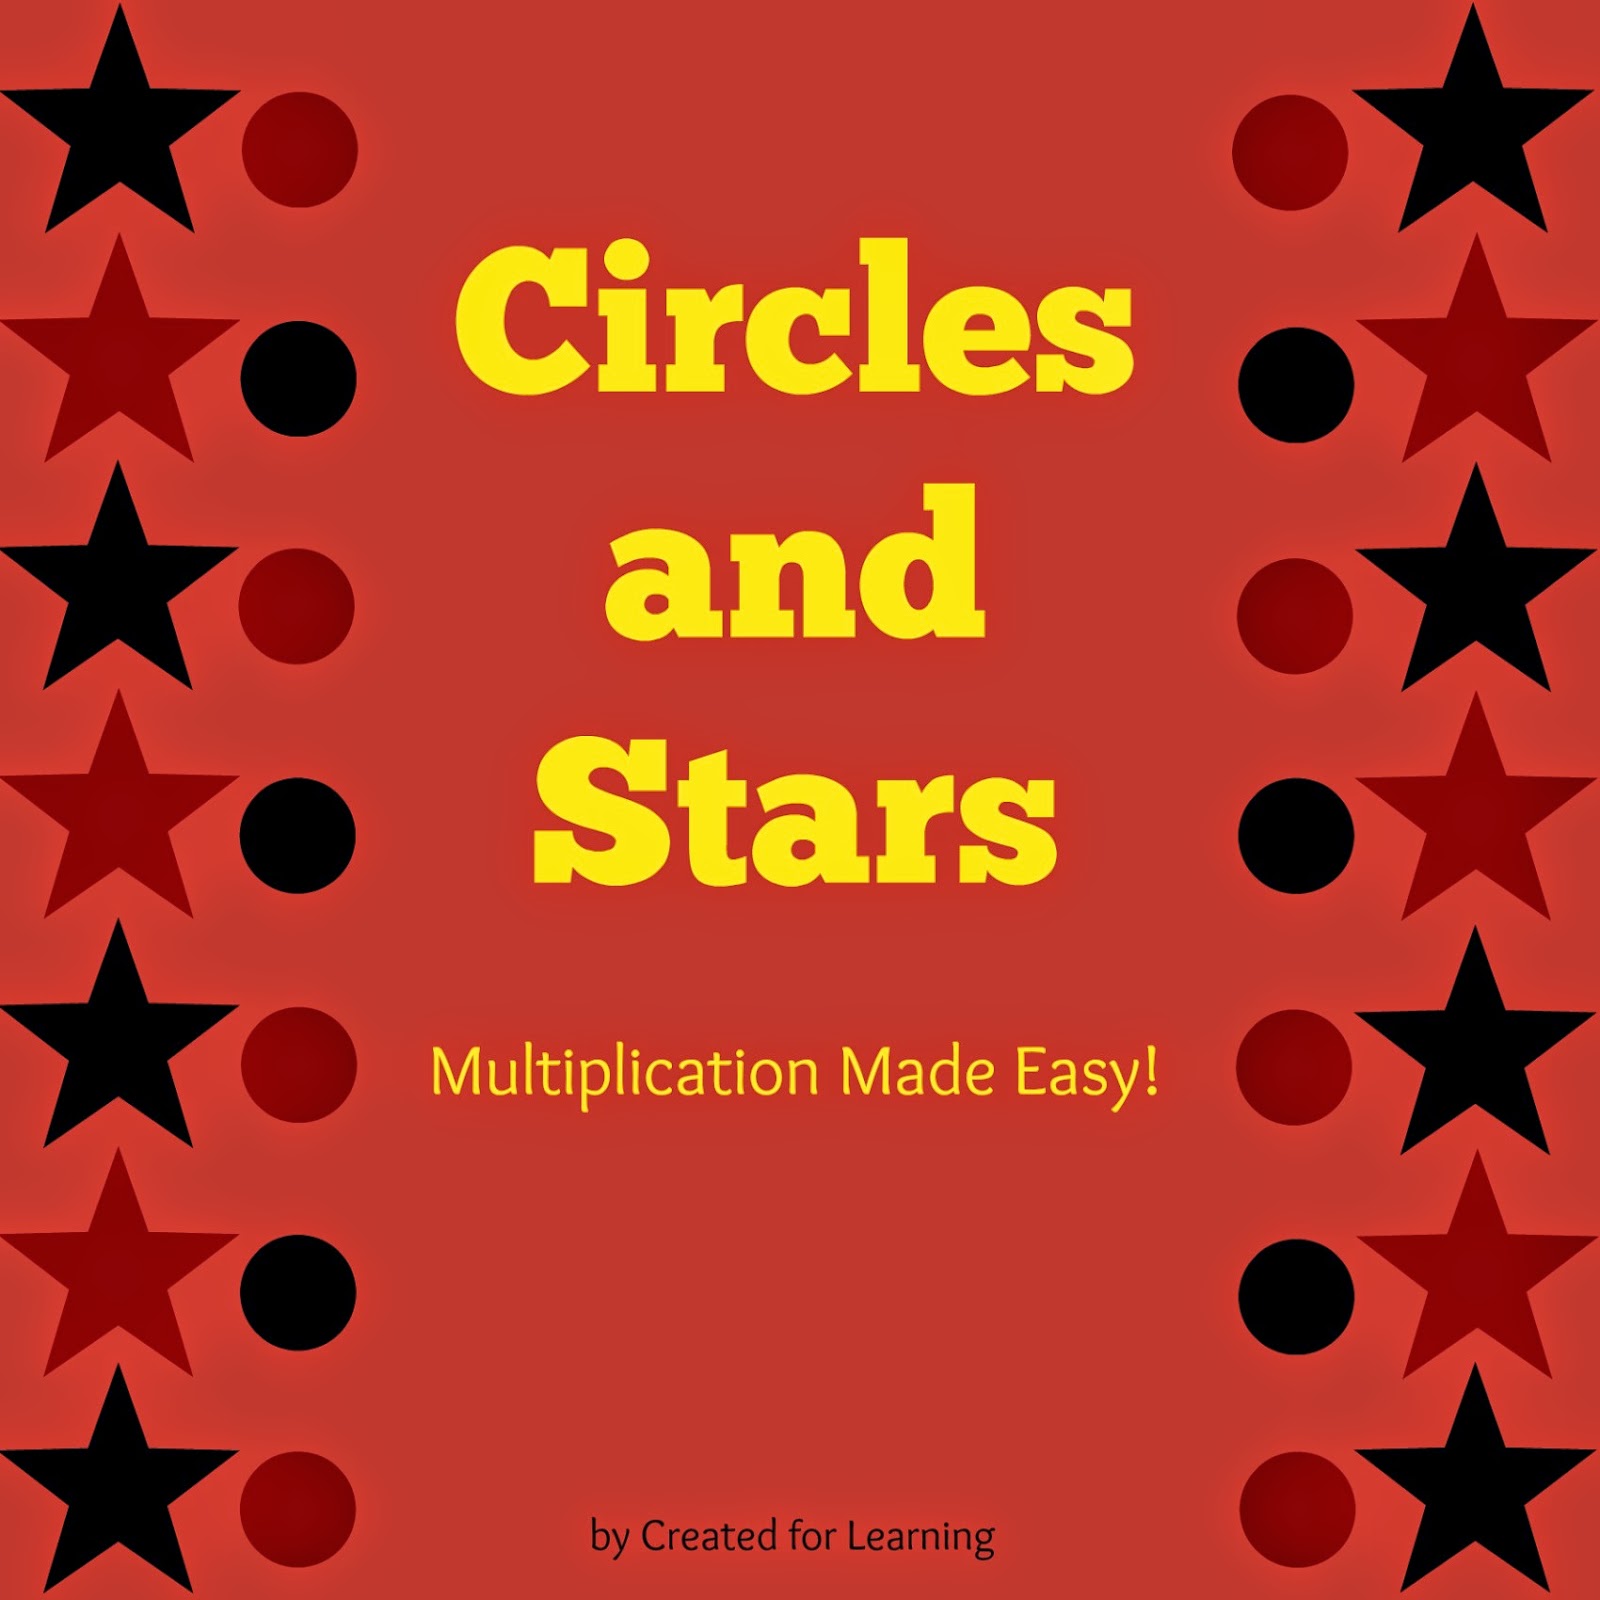 http://www.teacherspayteachers.com/Product/Circles-and-Stars-Multiplication-Made-Easy-388875